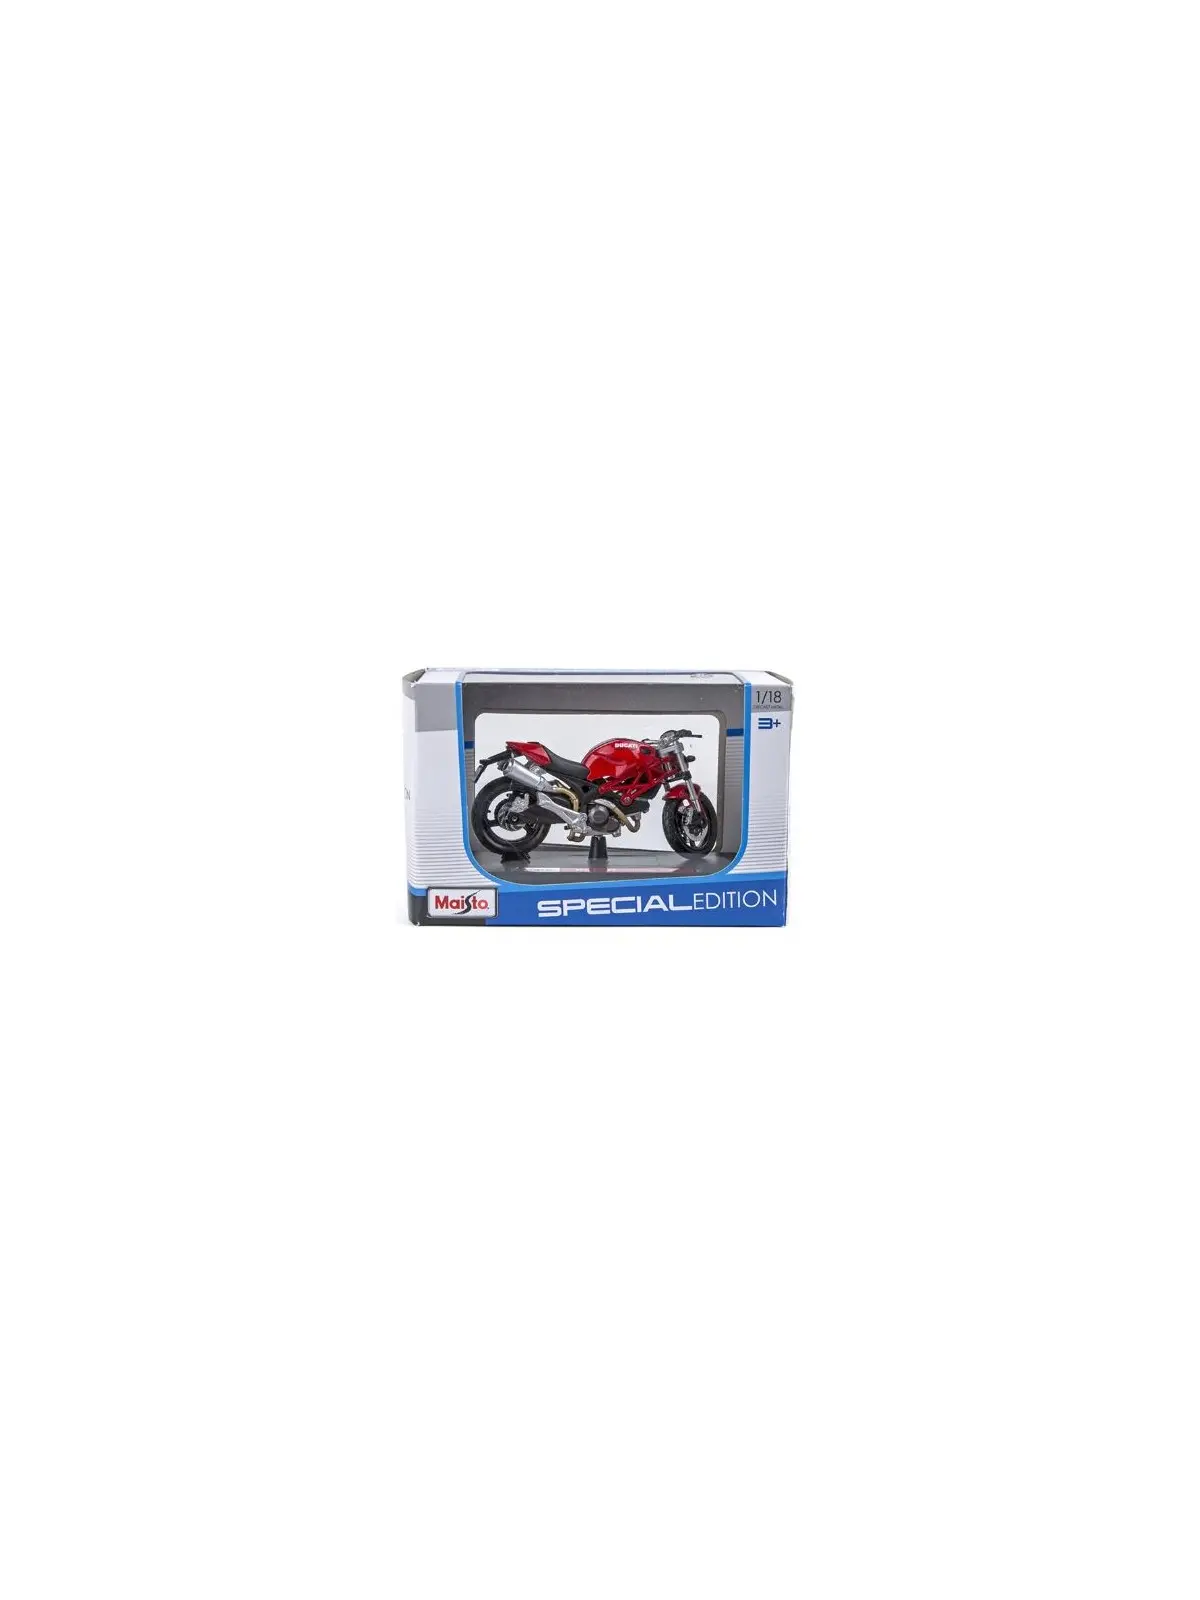 Maisto Moto Ducati Monster 696 Special Edition Scala 1/18